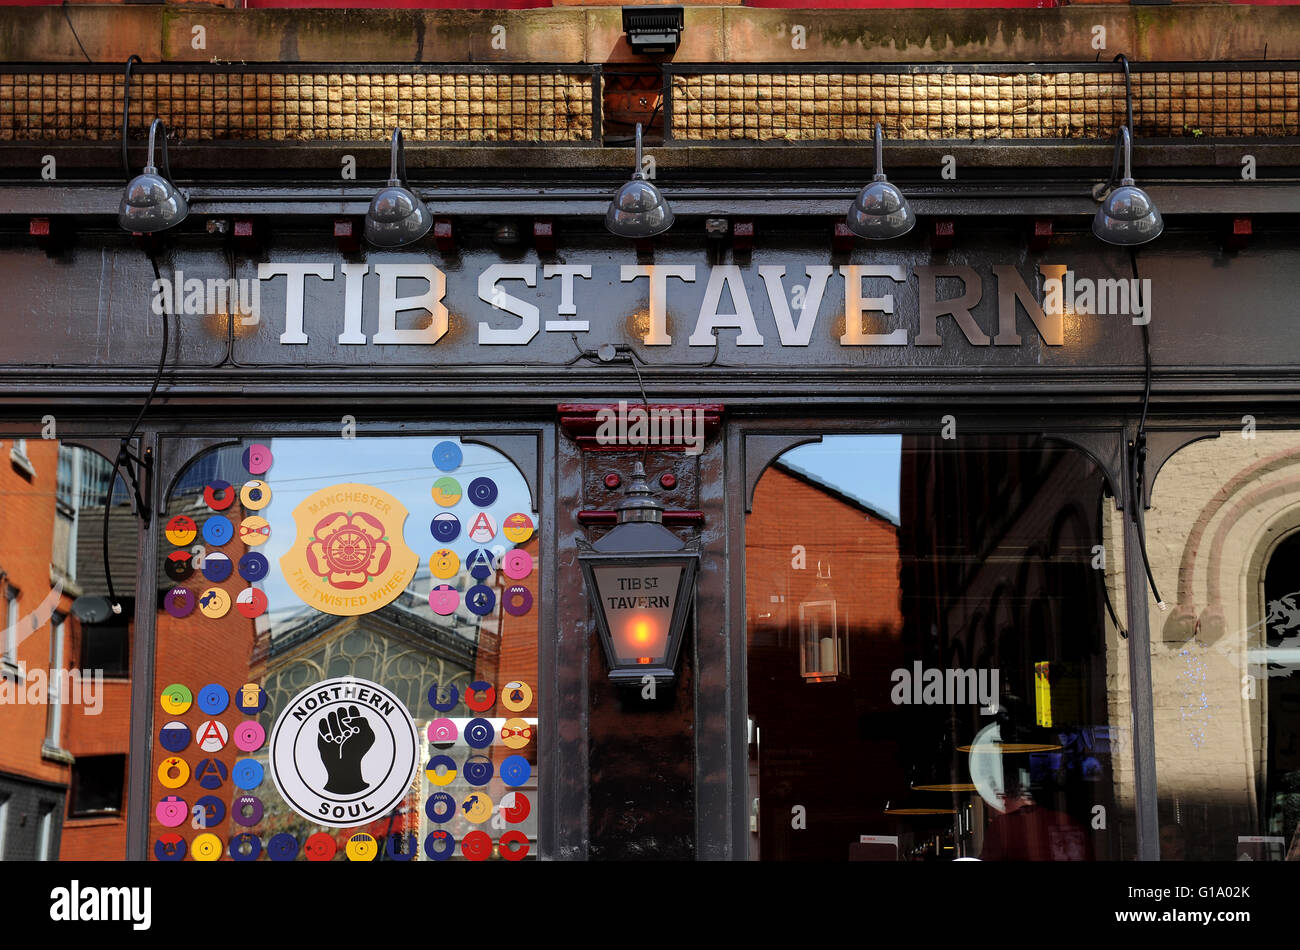 Tib Street Tavern, Northern Quarter, Manchester, Tuesday May 10, 2016. Stock Photo